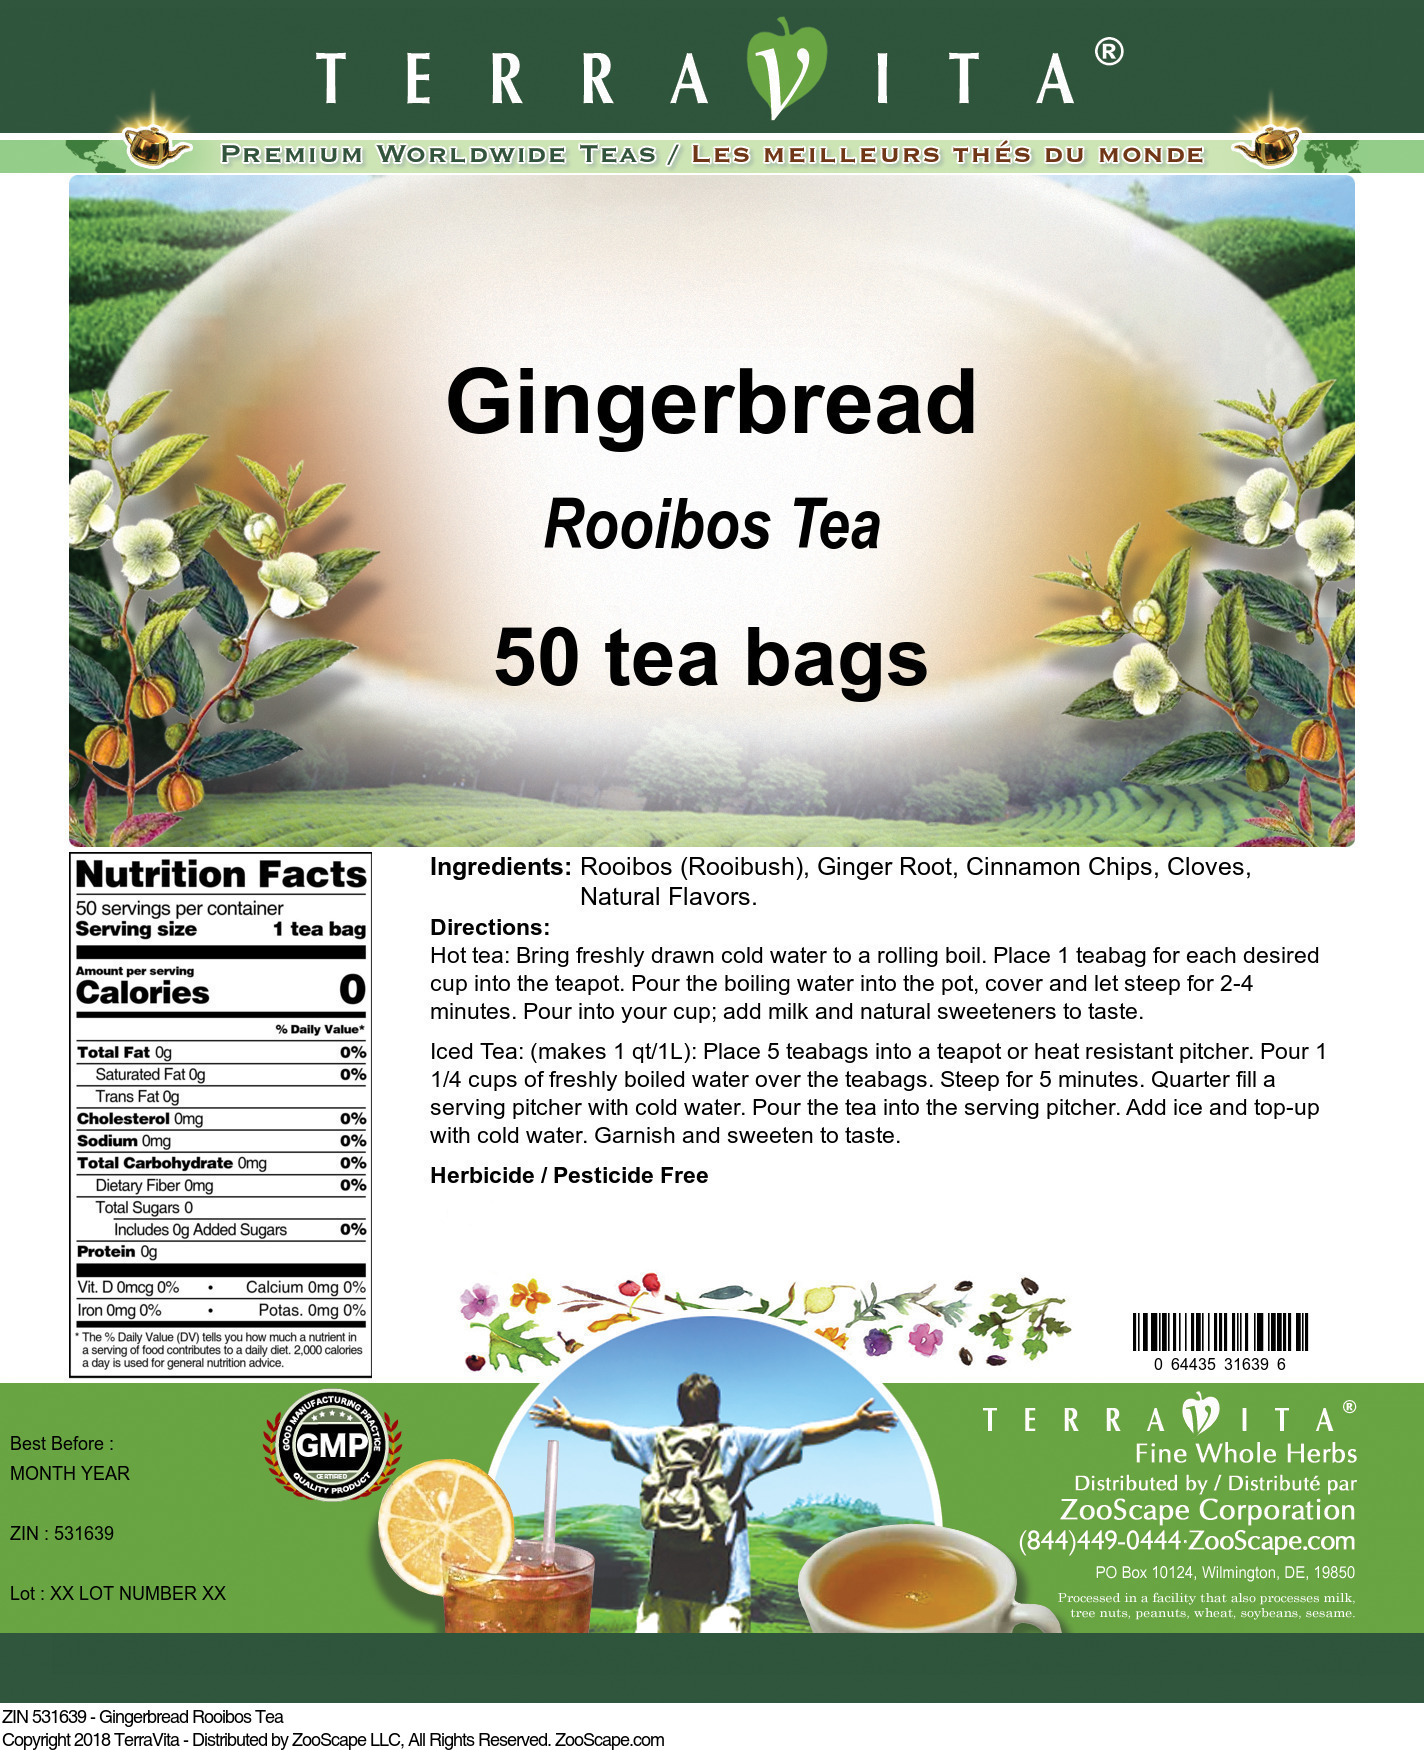 Gingerbread Rooibos Tea - Label